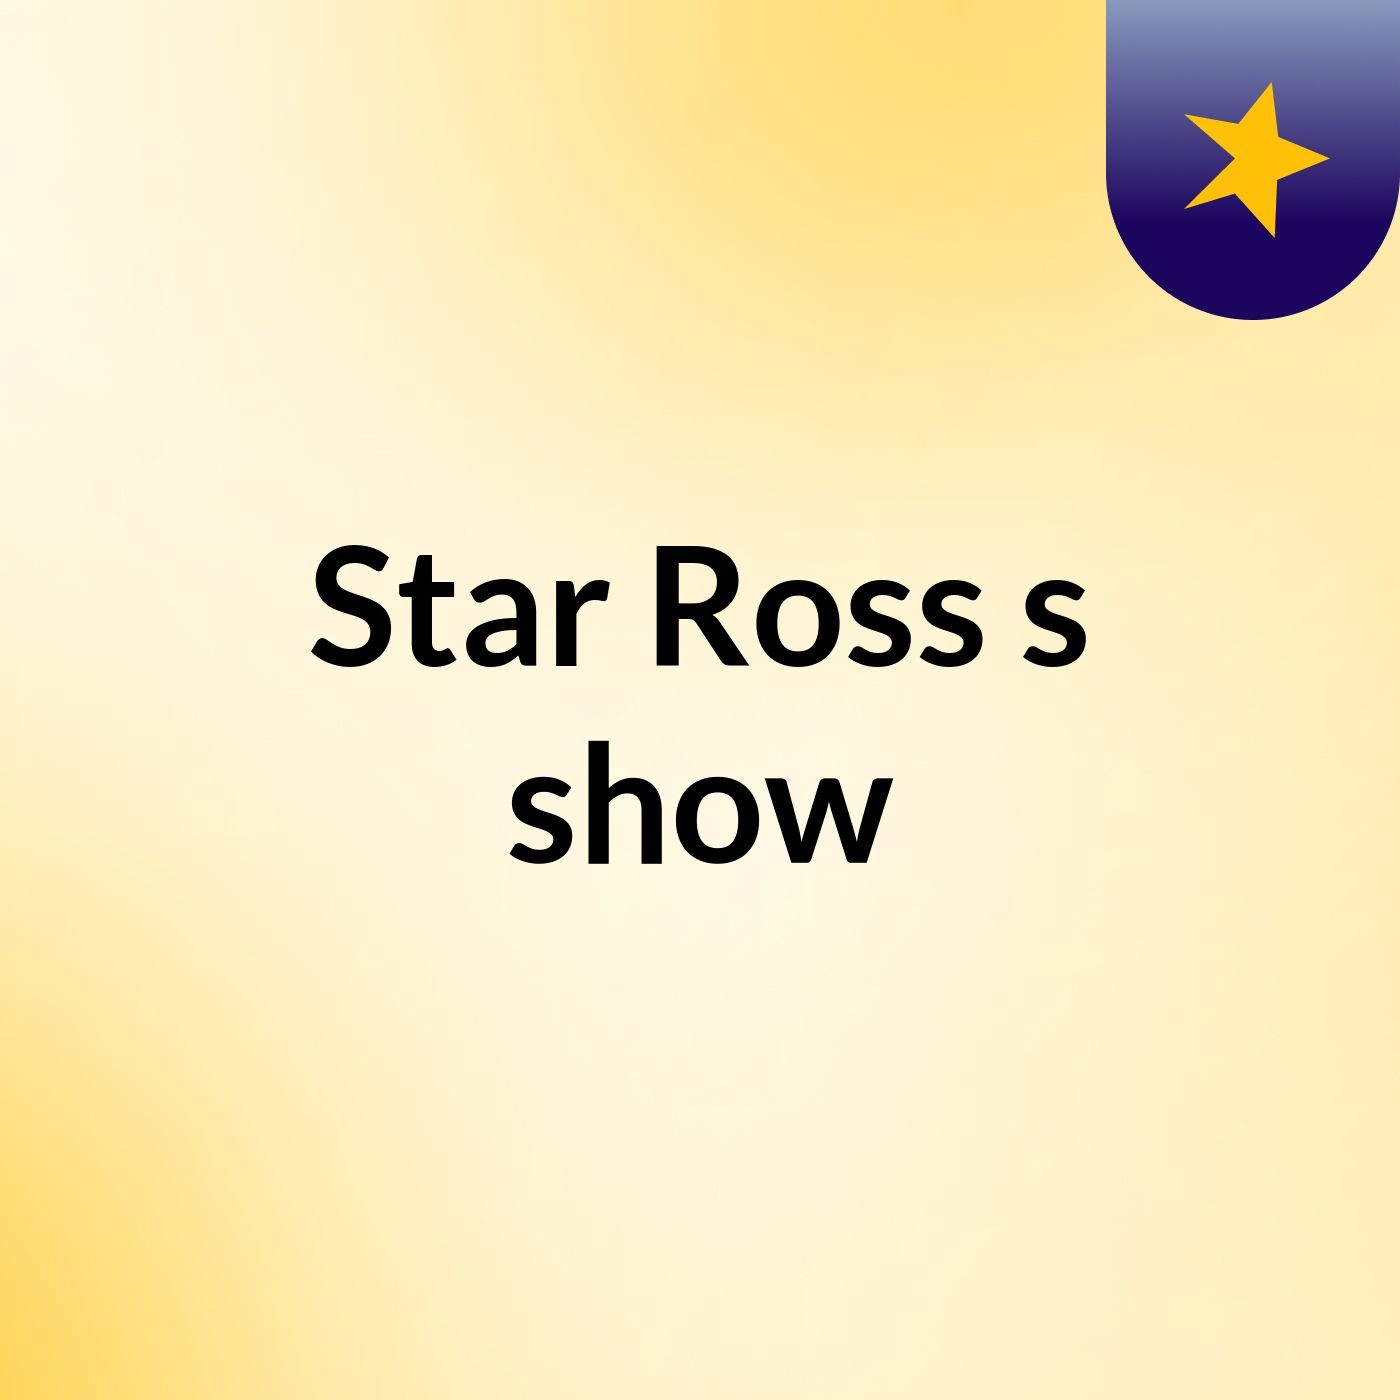 Episode 2 - Star Ross's show